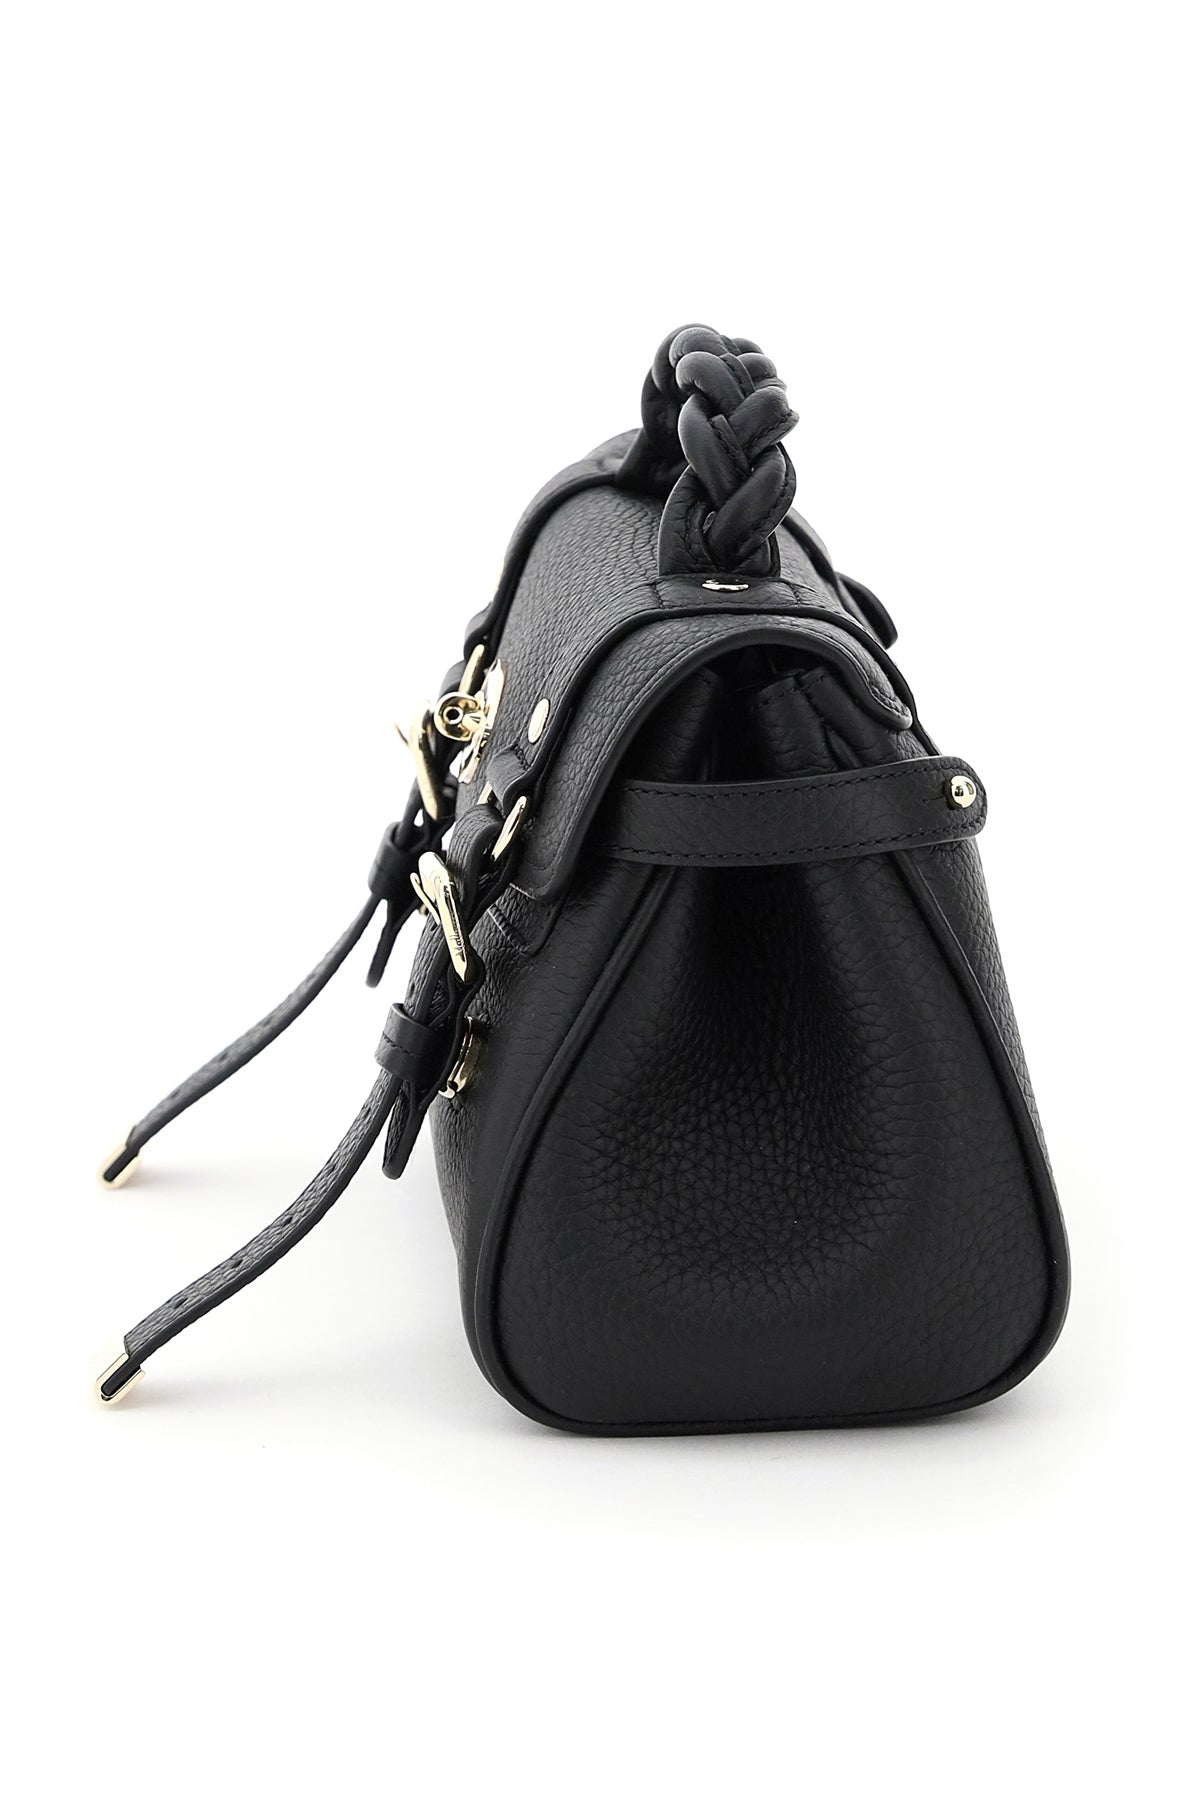 Mulberry Alexa Leather Mini Bag Black